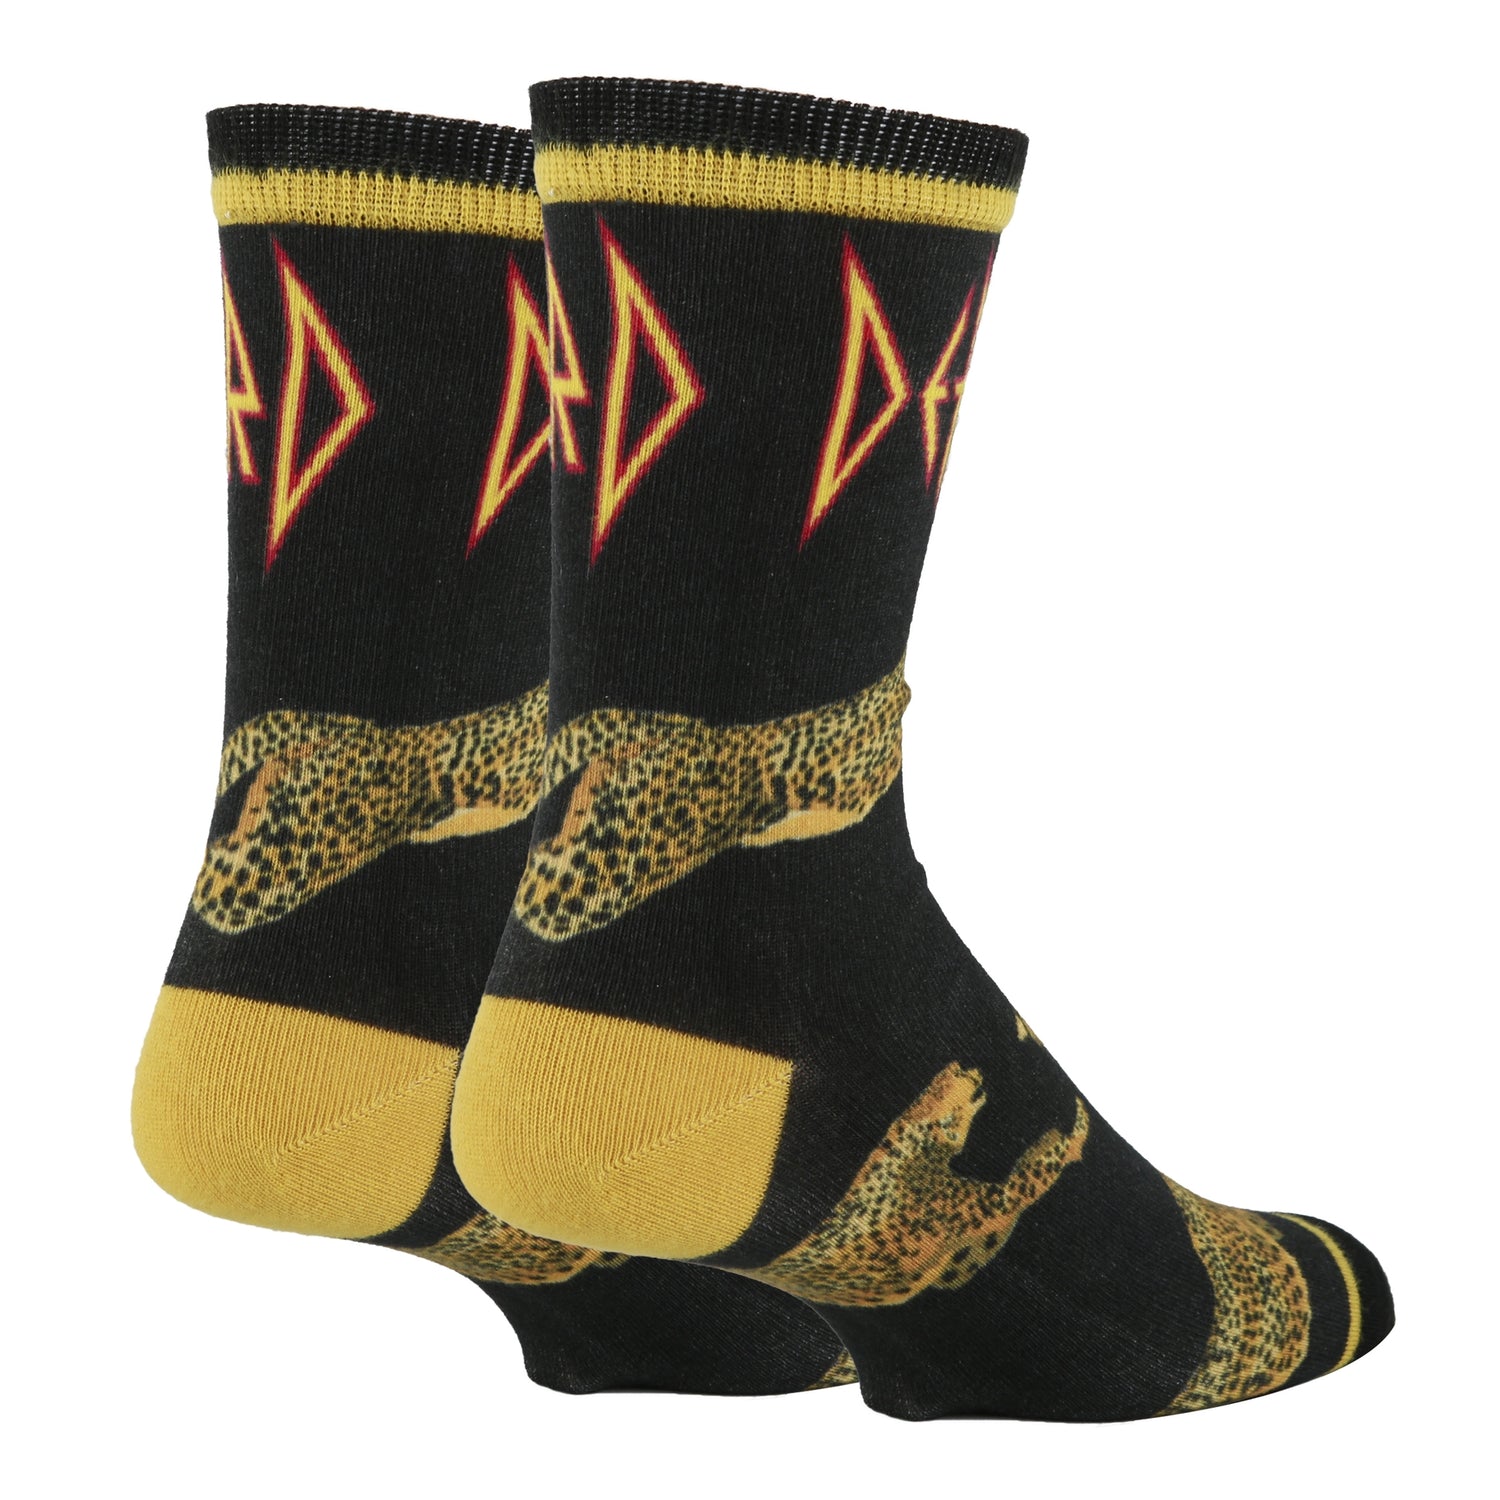 Def Leppard socks